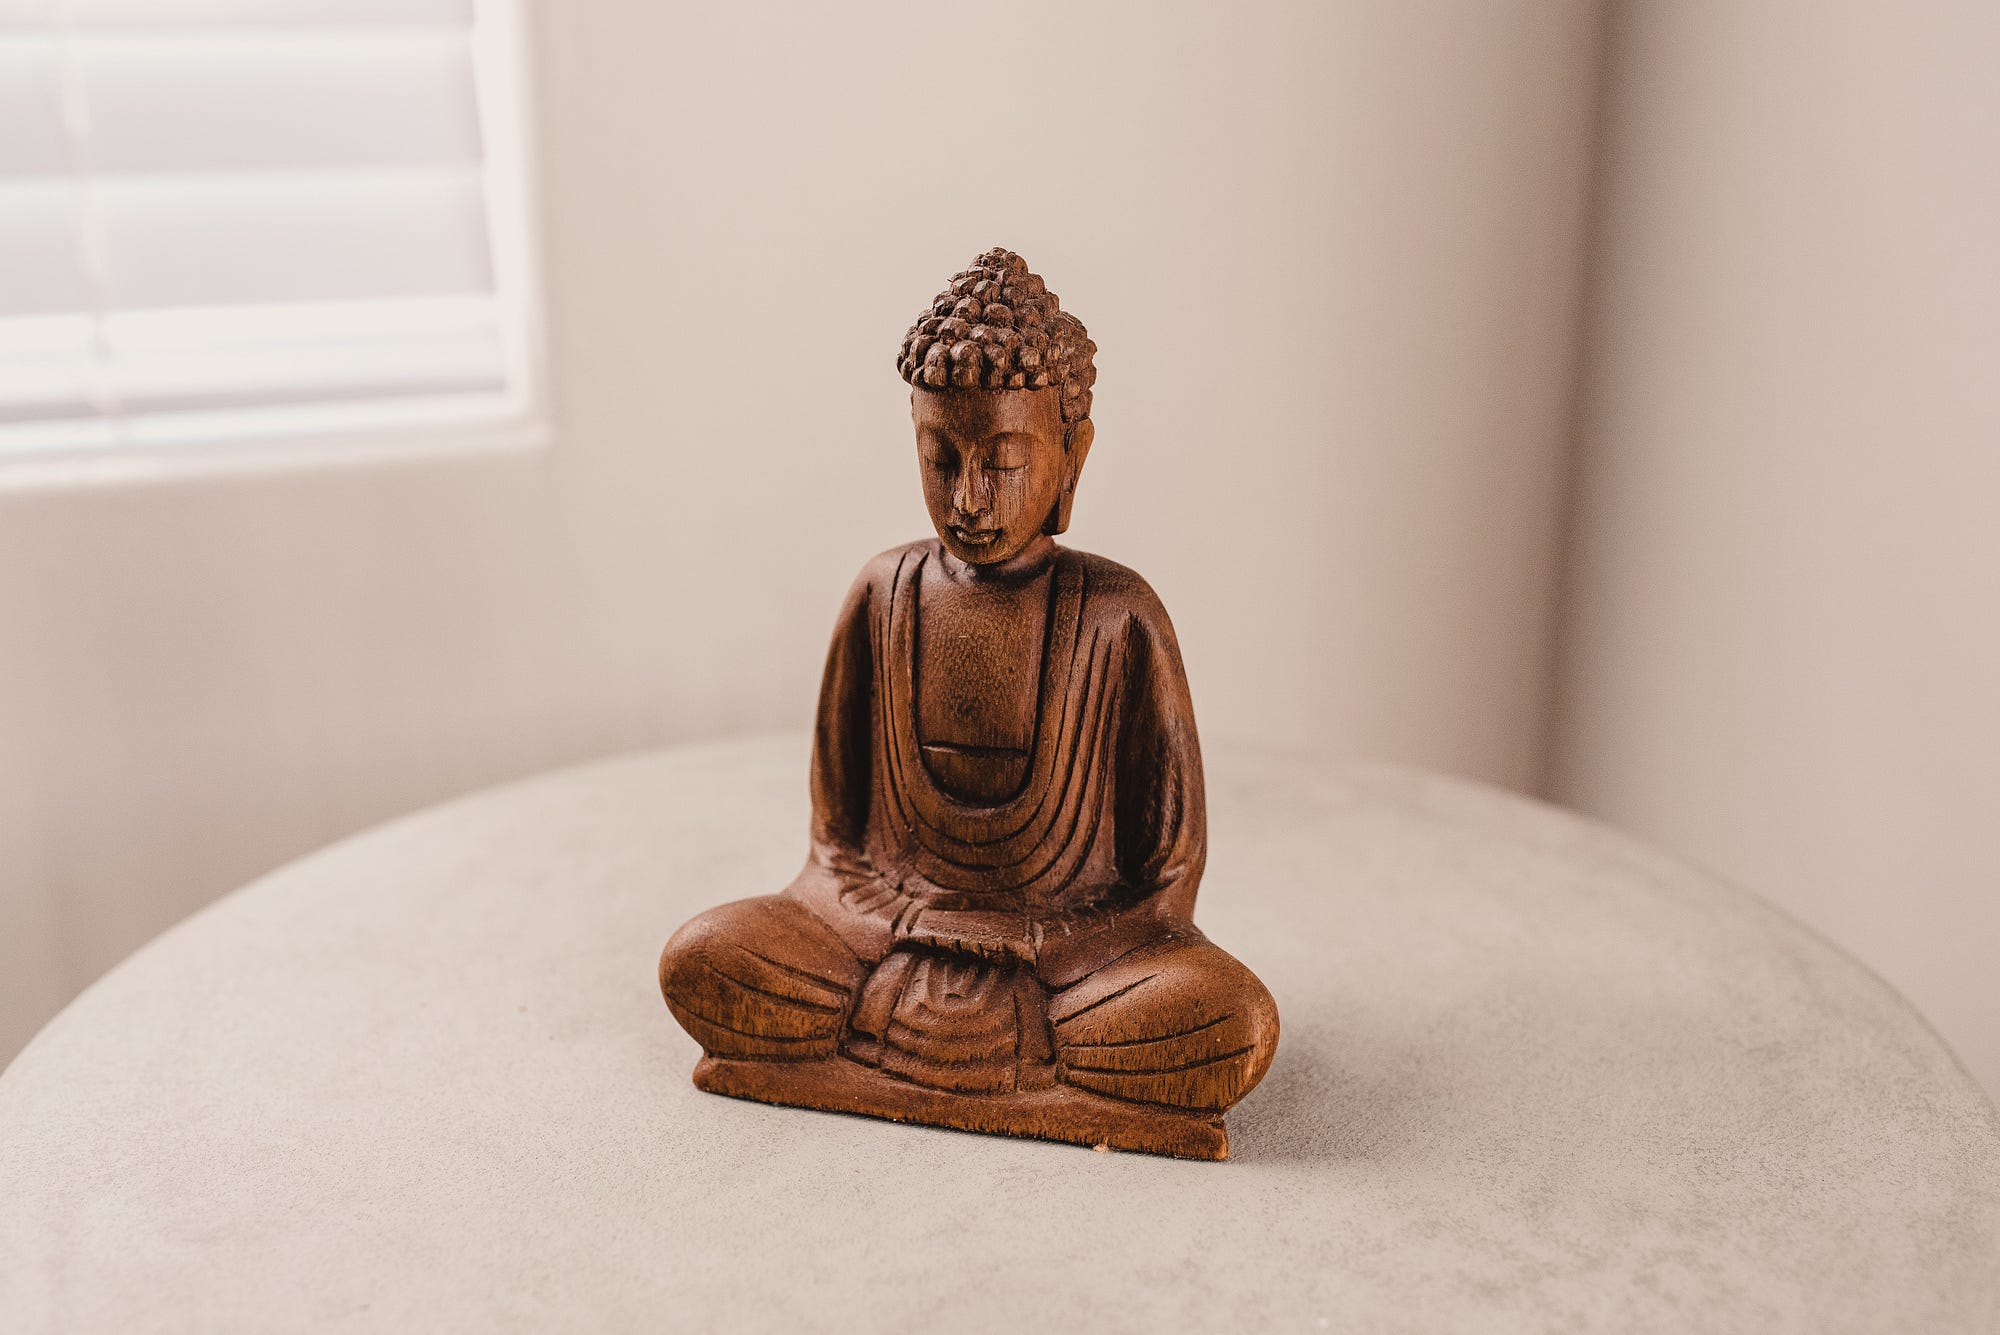 Wherever You Go, You Take Yourself with You - Tiny Buddha